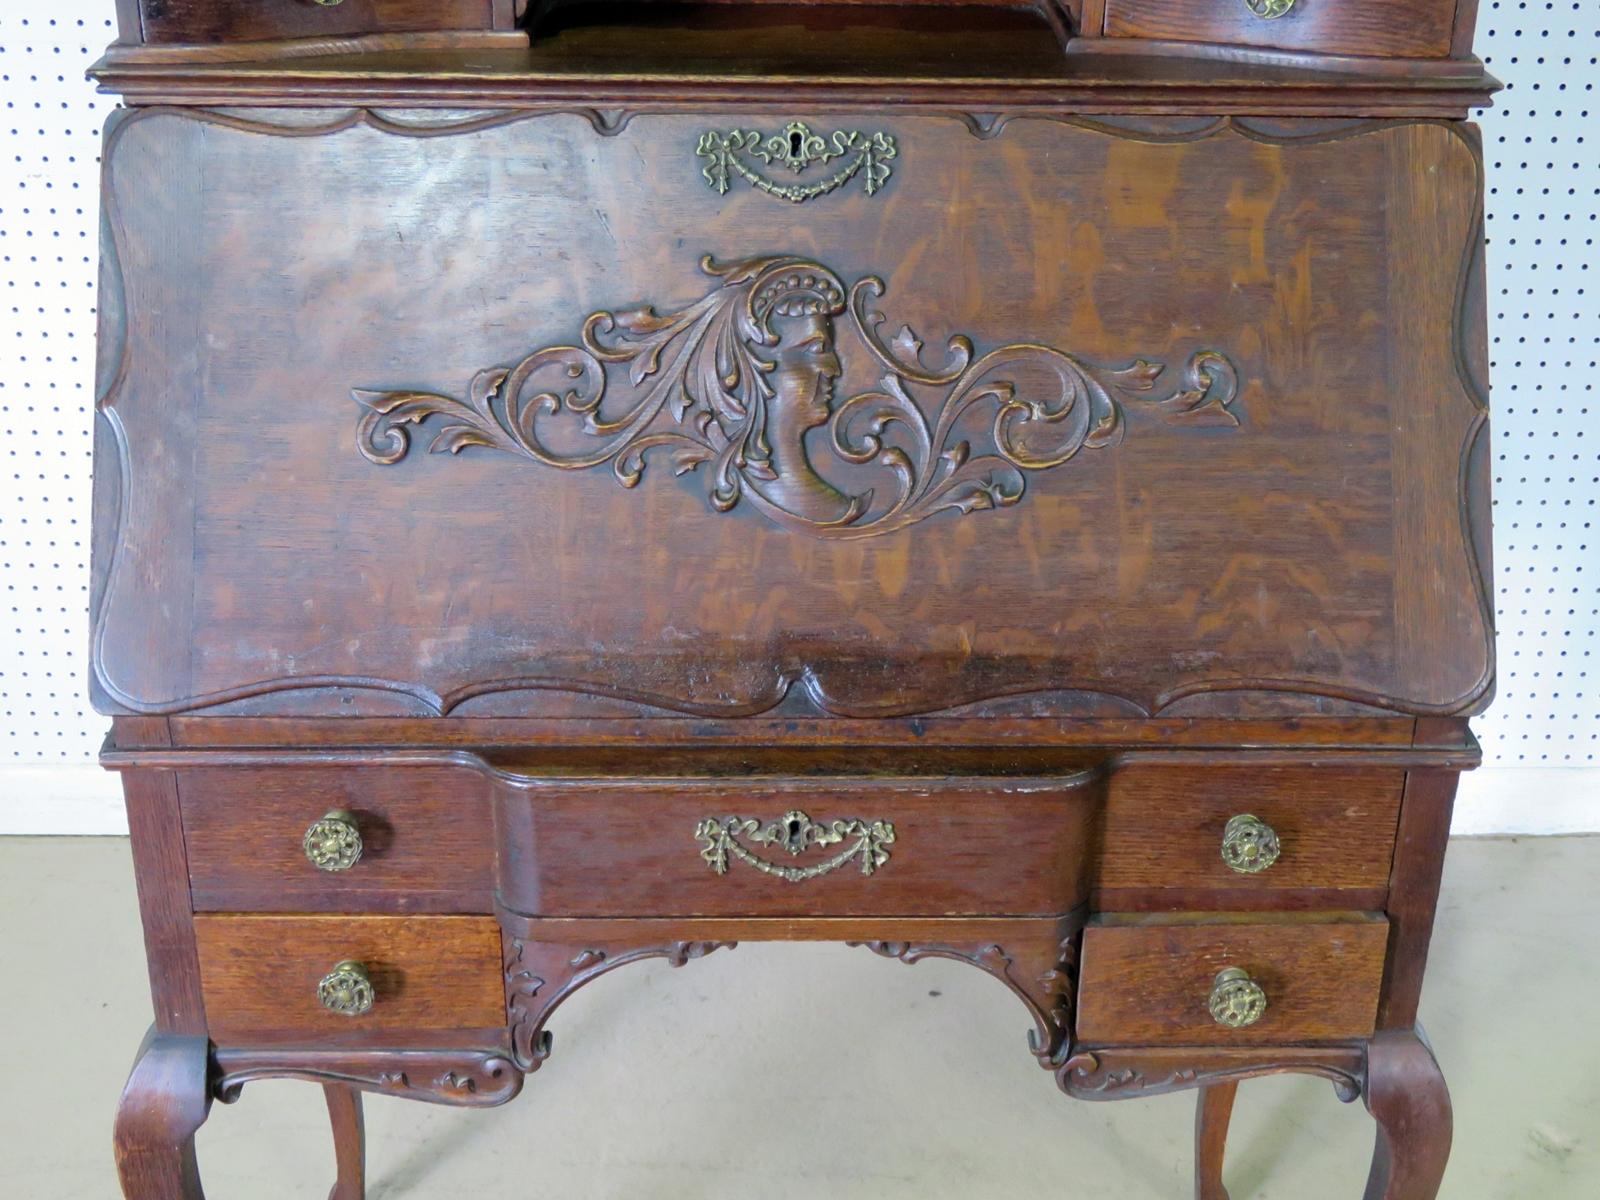 Antique quarter-sawn oak secretary desk with a beveled mirror backsplash and brass accents.